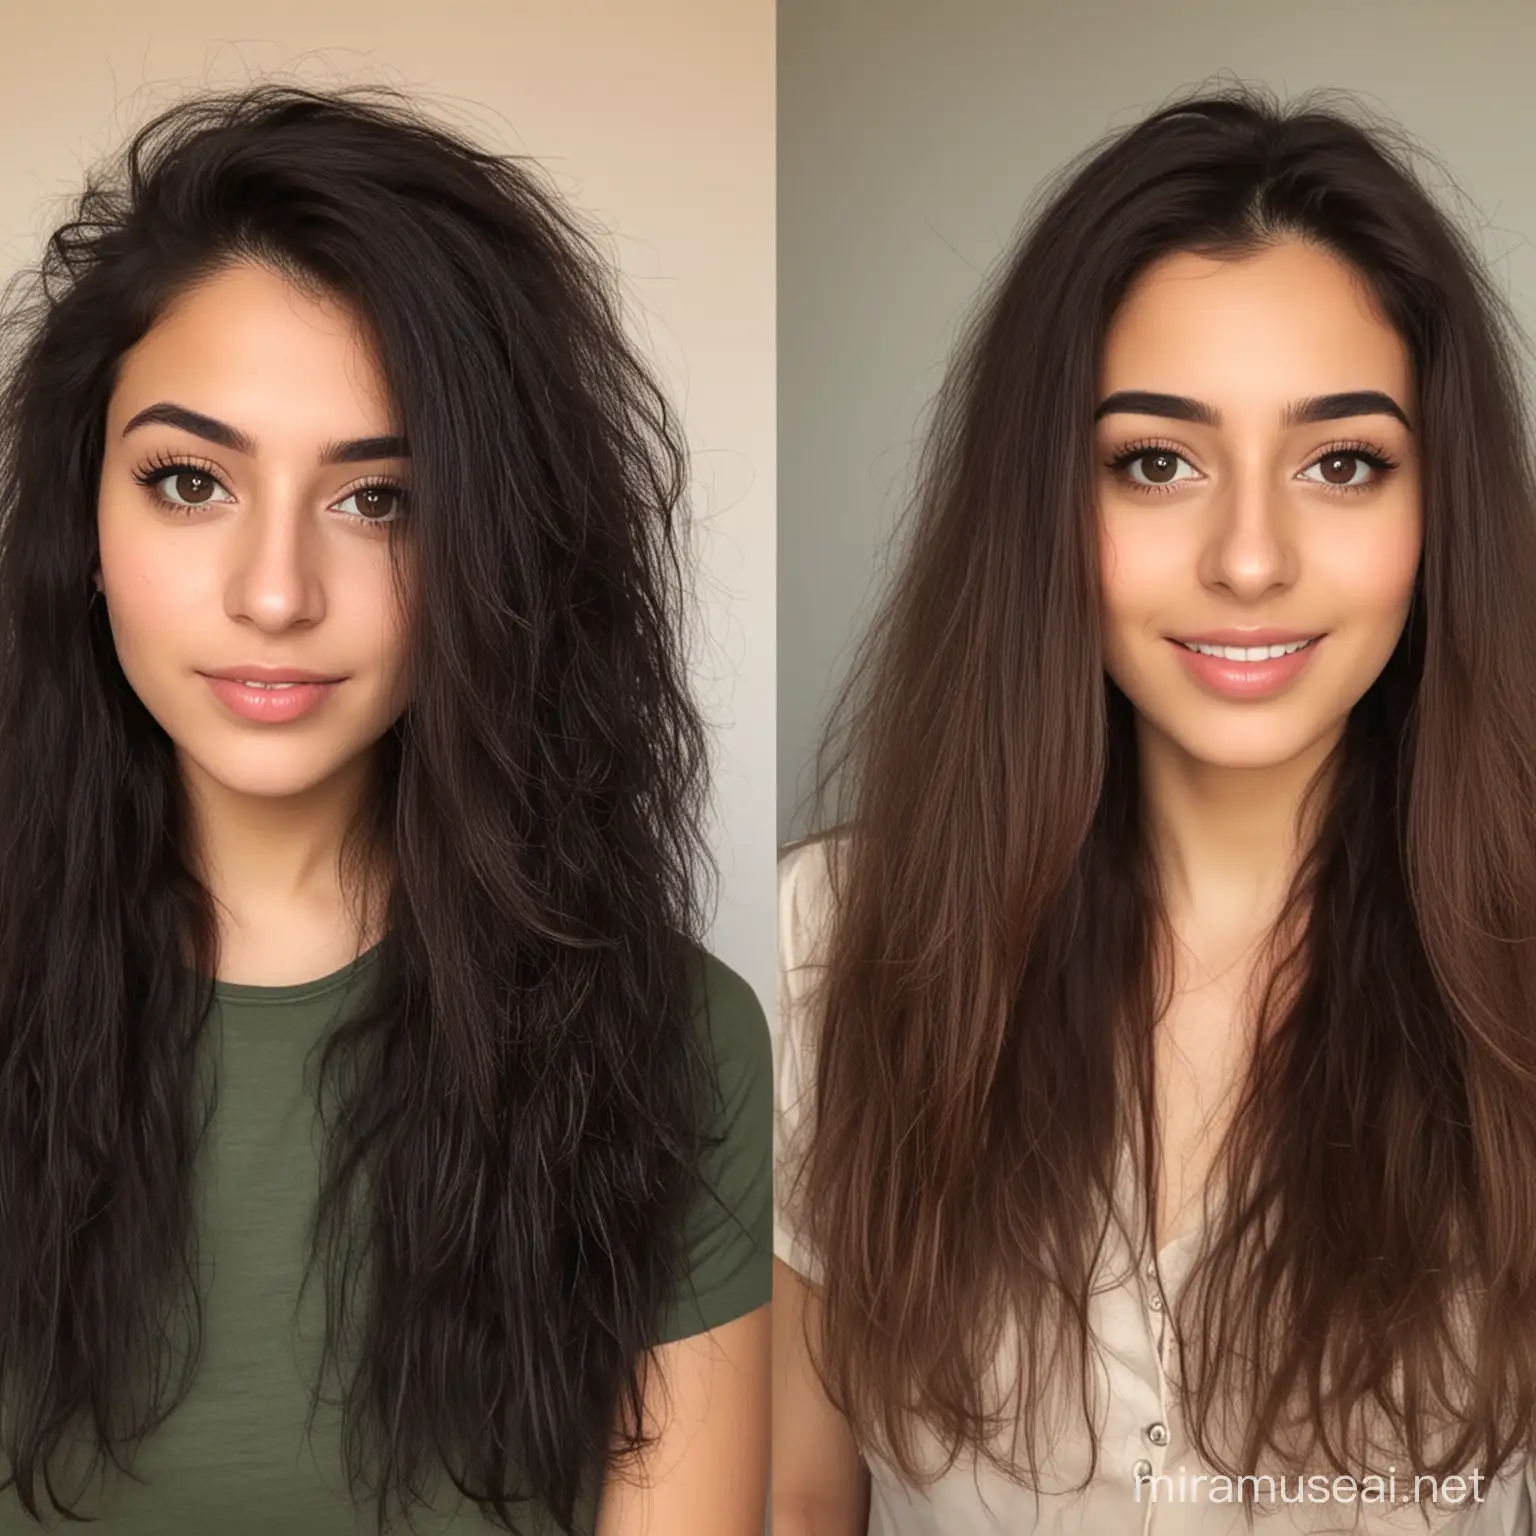 very frizz hair before, and  straight  
 very sleek hair after, arabian girl